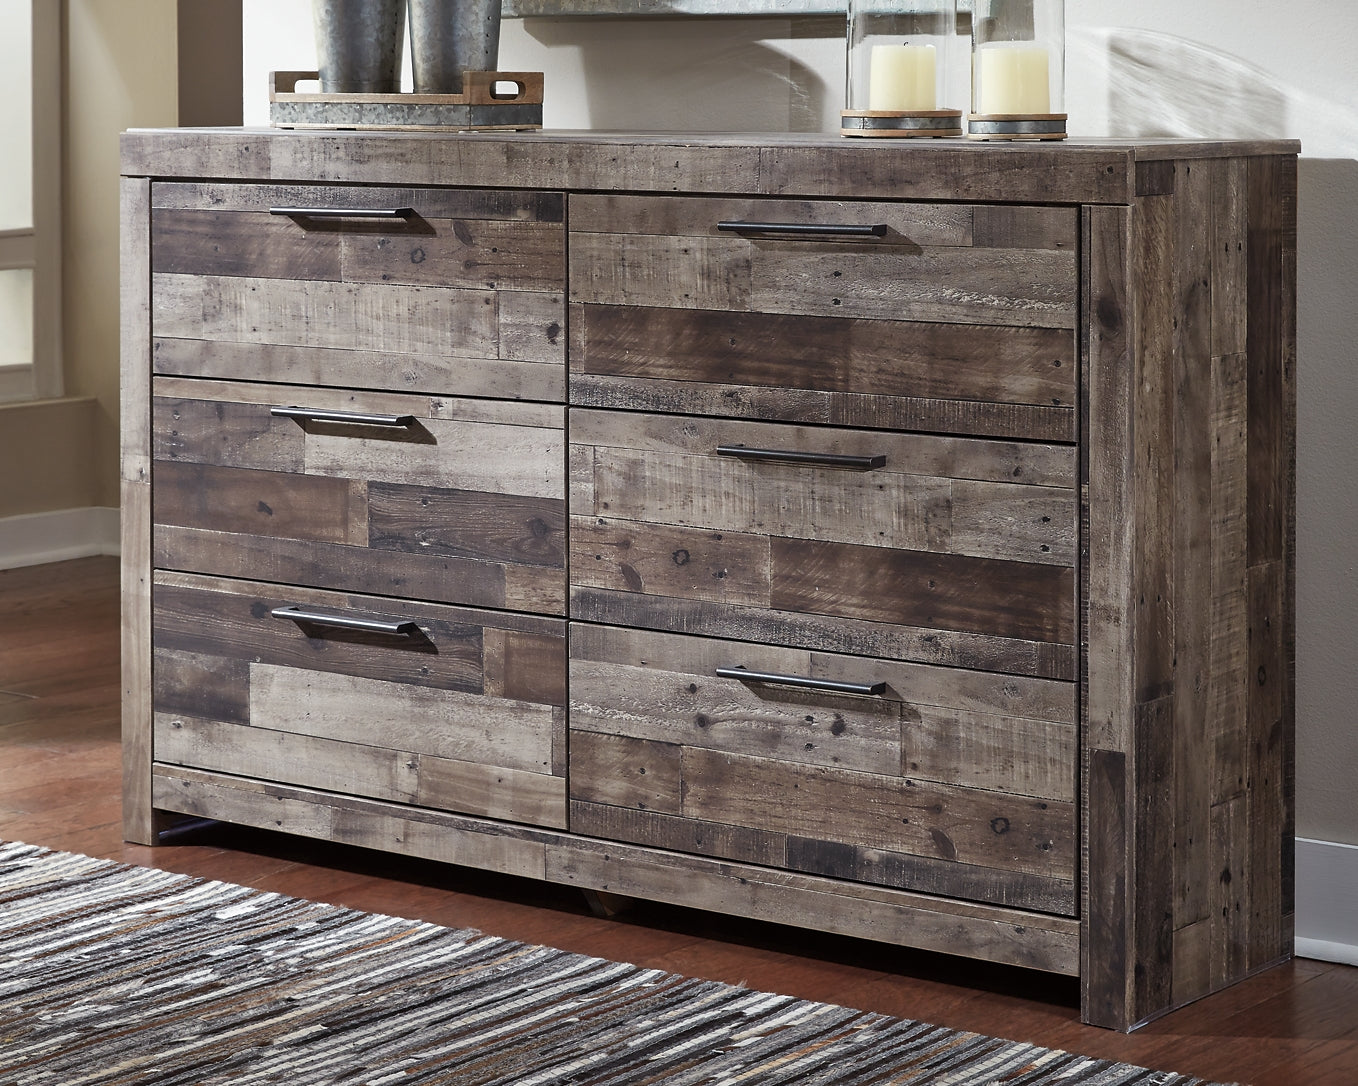 Derekson King Panel Bed with Dresser at Cloud 9 Mattress & Furniture furniture, home furnishing, home decor